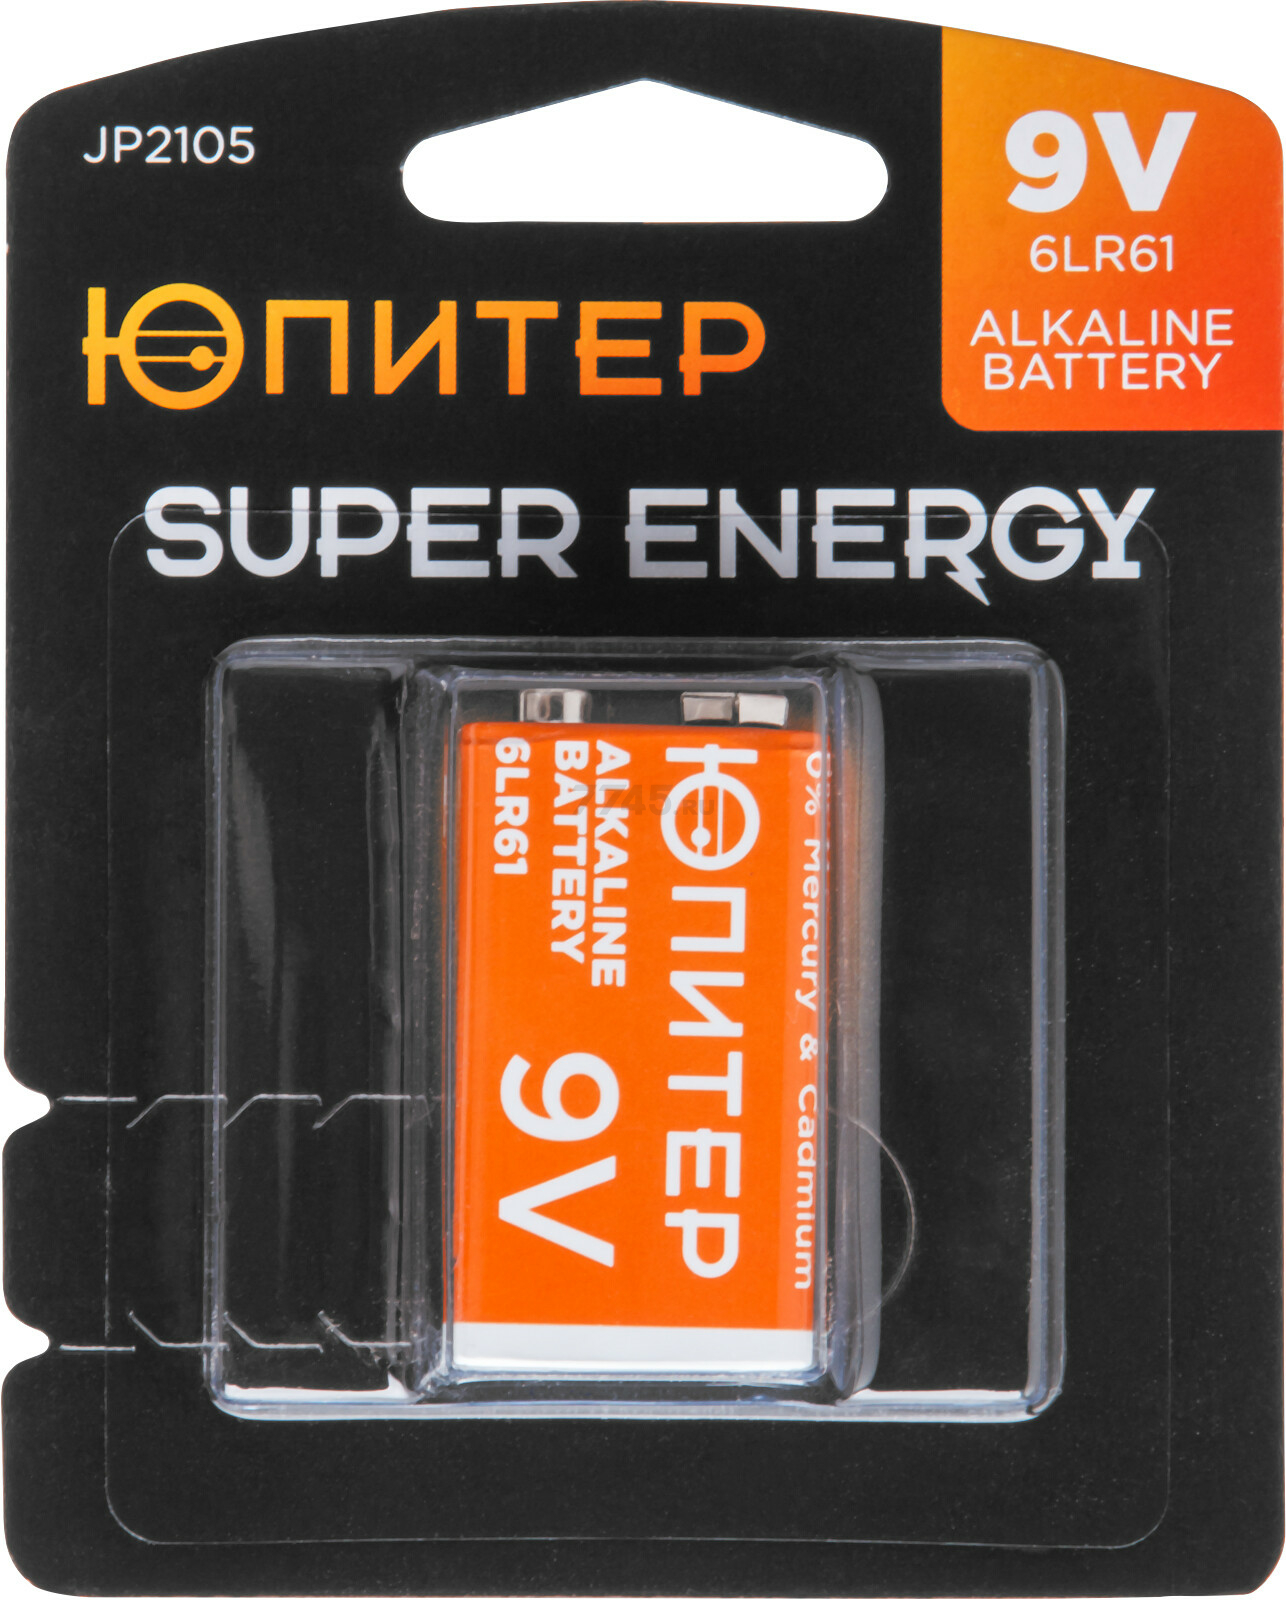 Батарейка 6LR61 ЮПИТЕР 9 V алкалиновая (JP2105) - Фото 2